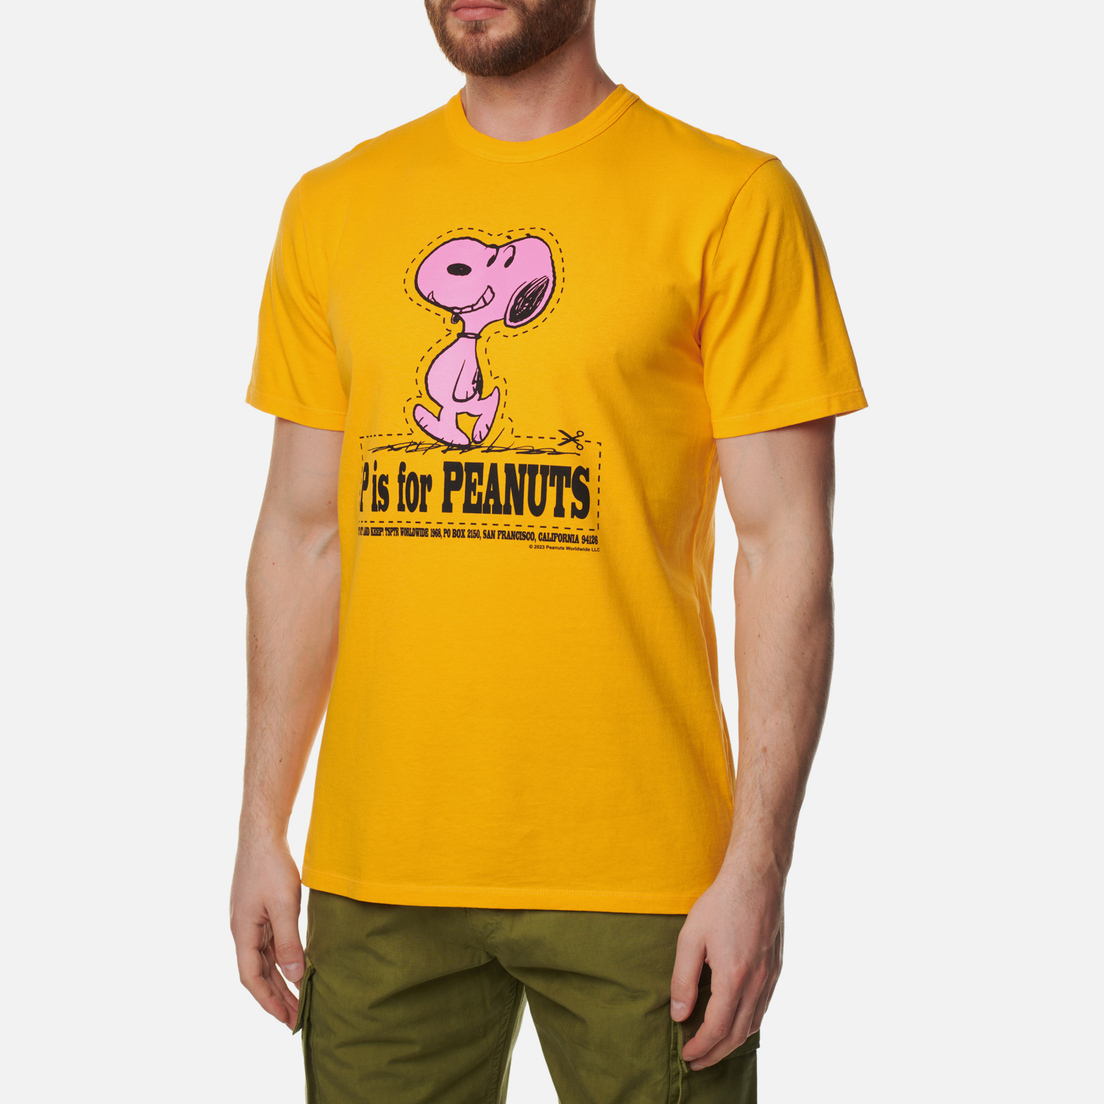 TSPTR Мужская футболка x Peanuts P Is For